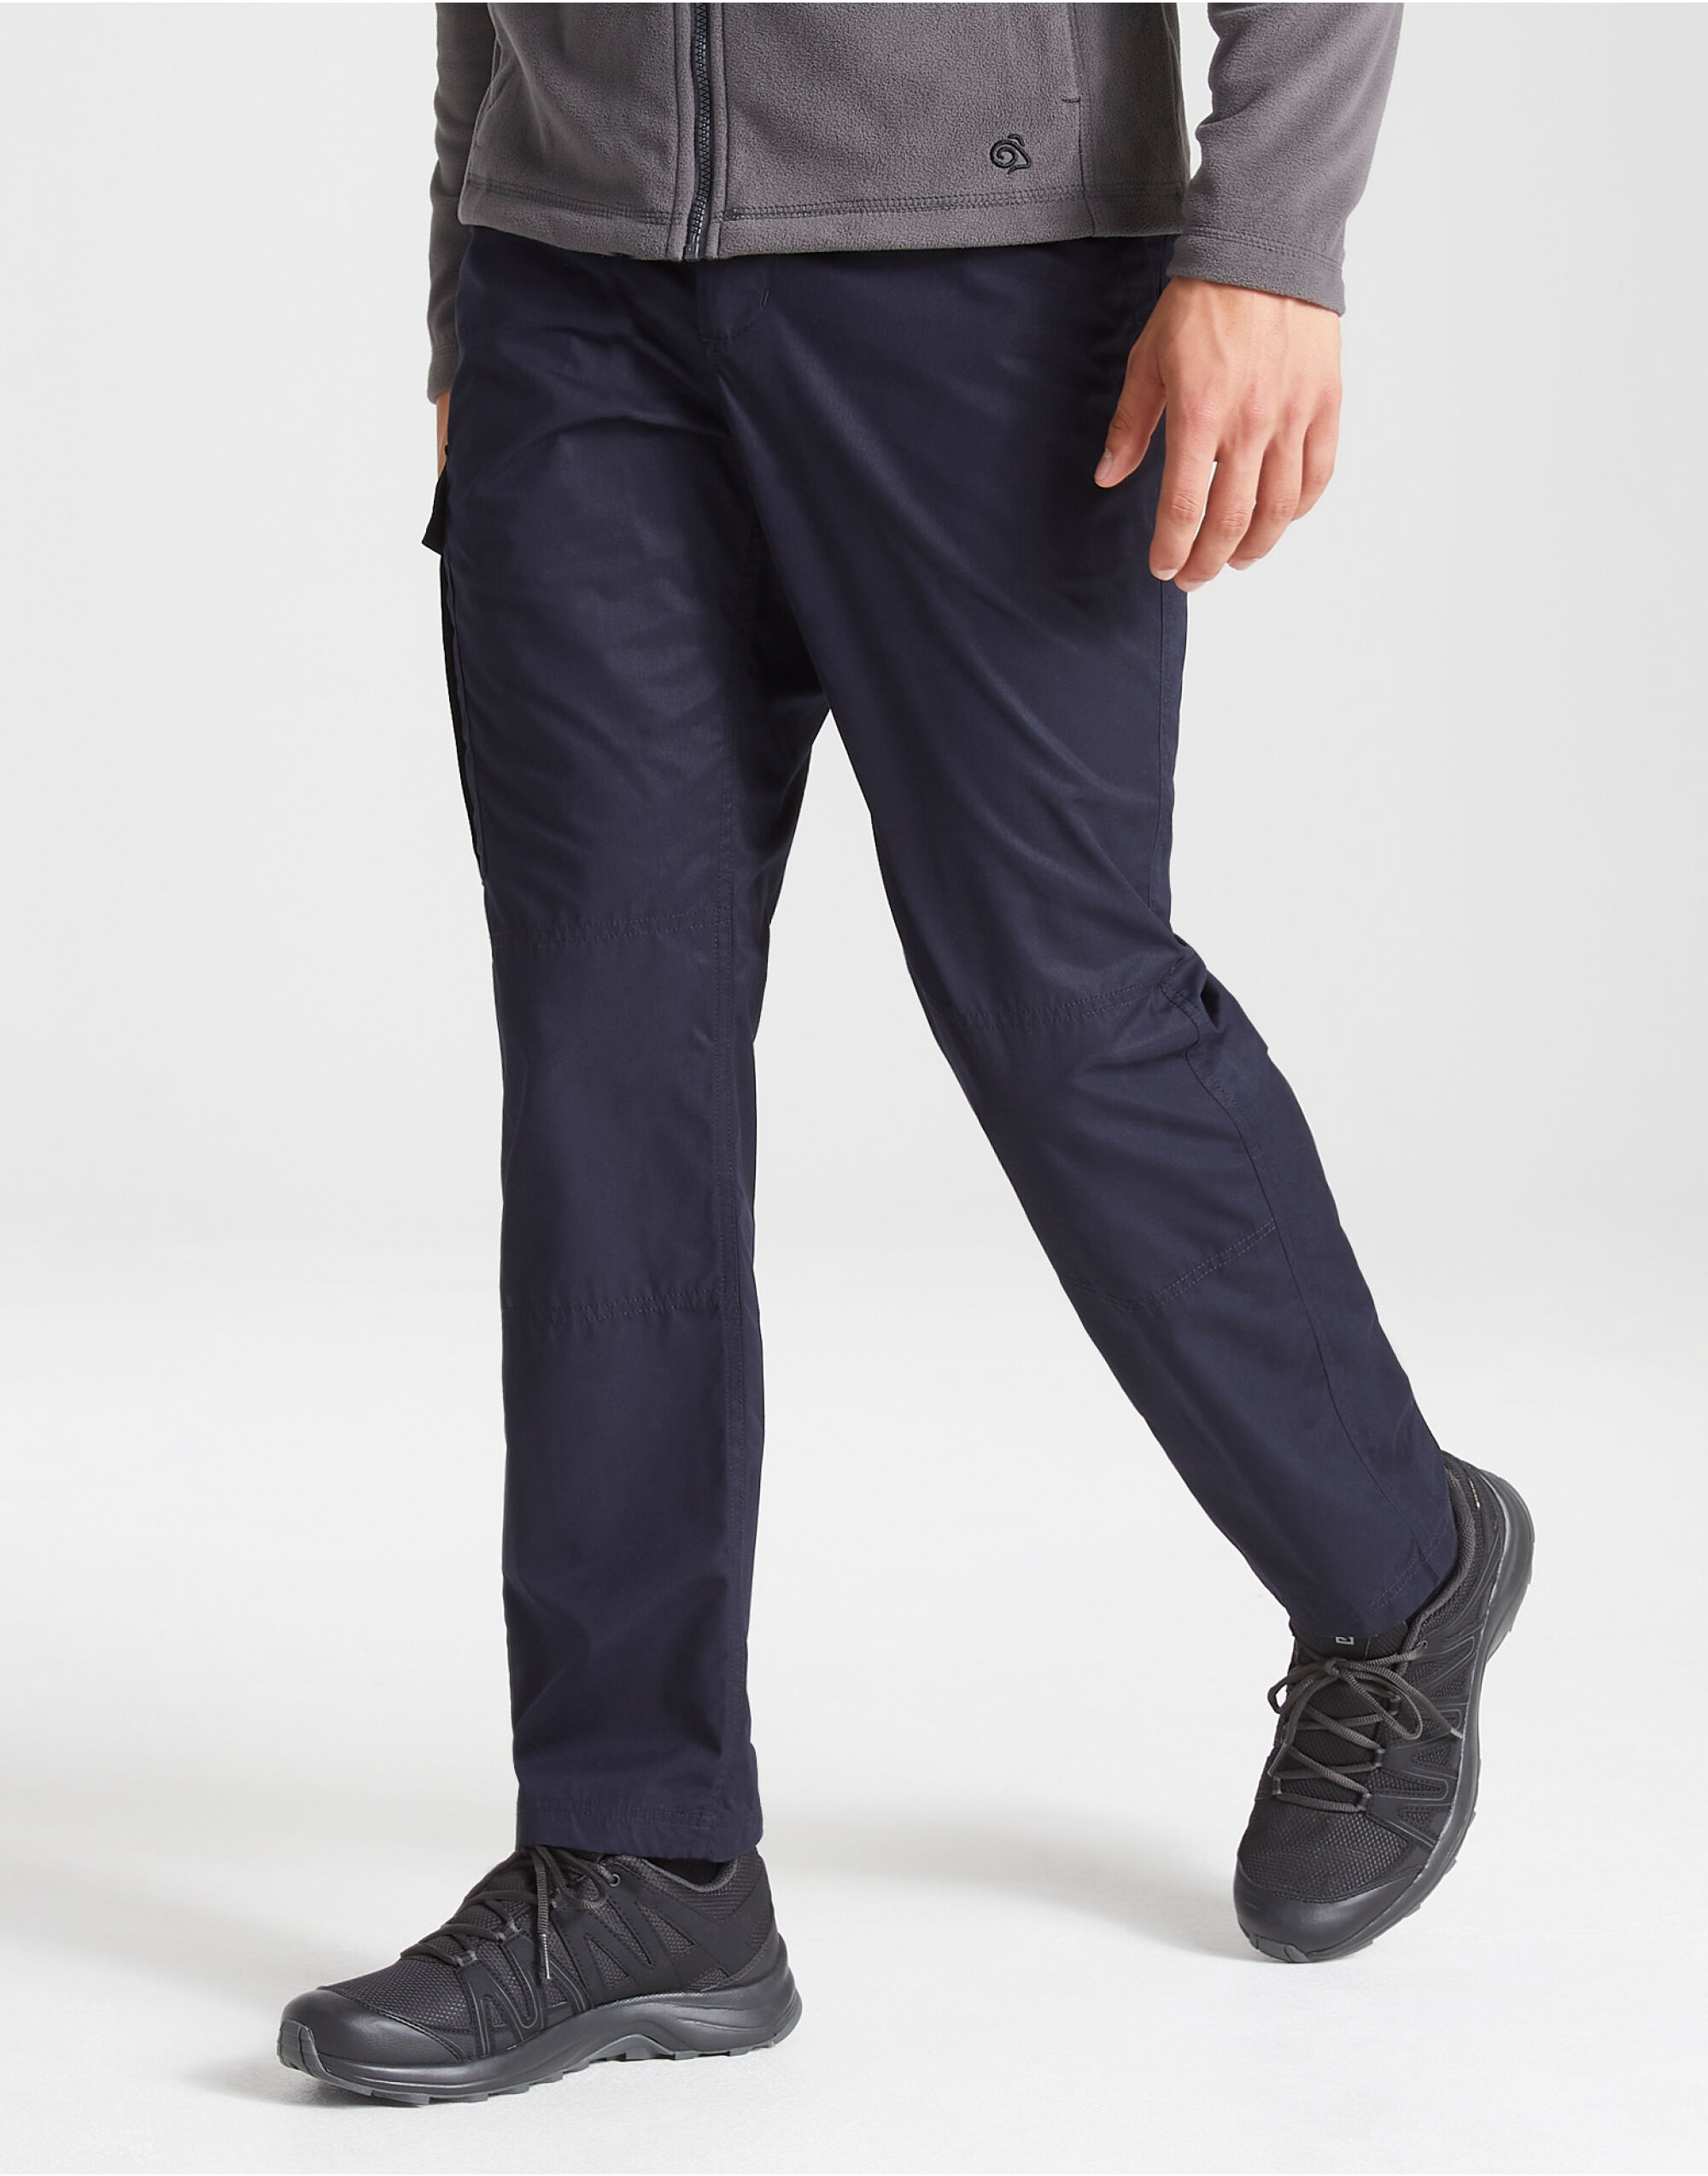 Men's Expert Kiwi Tailored Trousersr (Long)